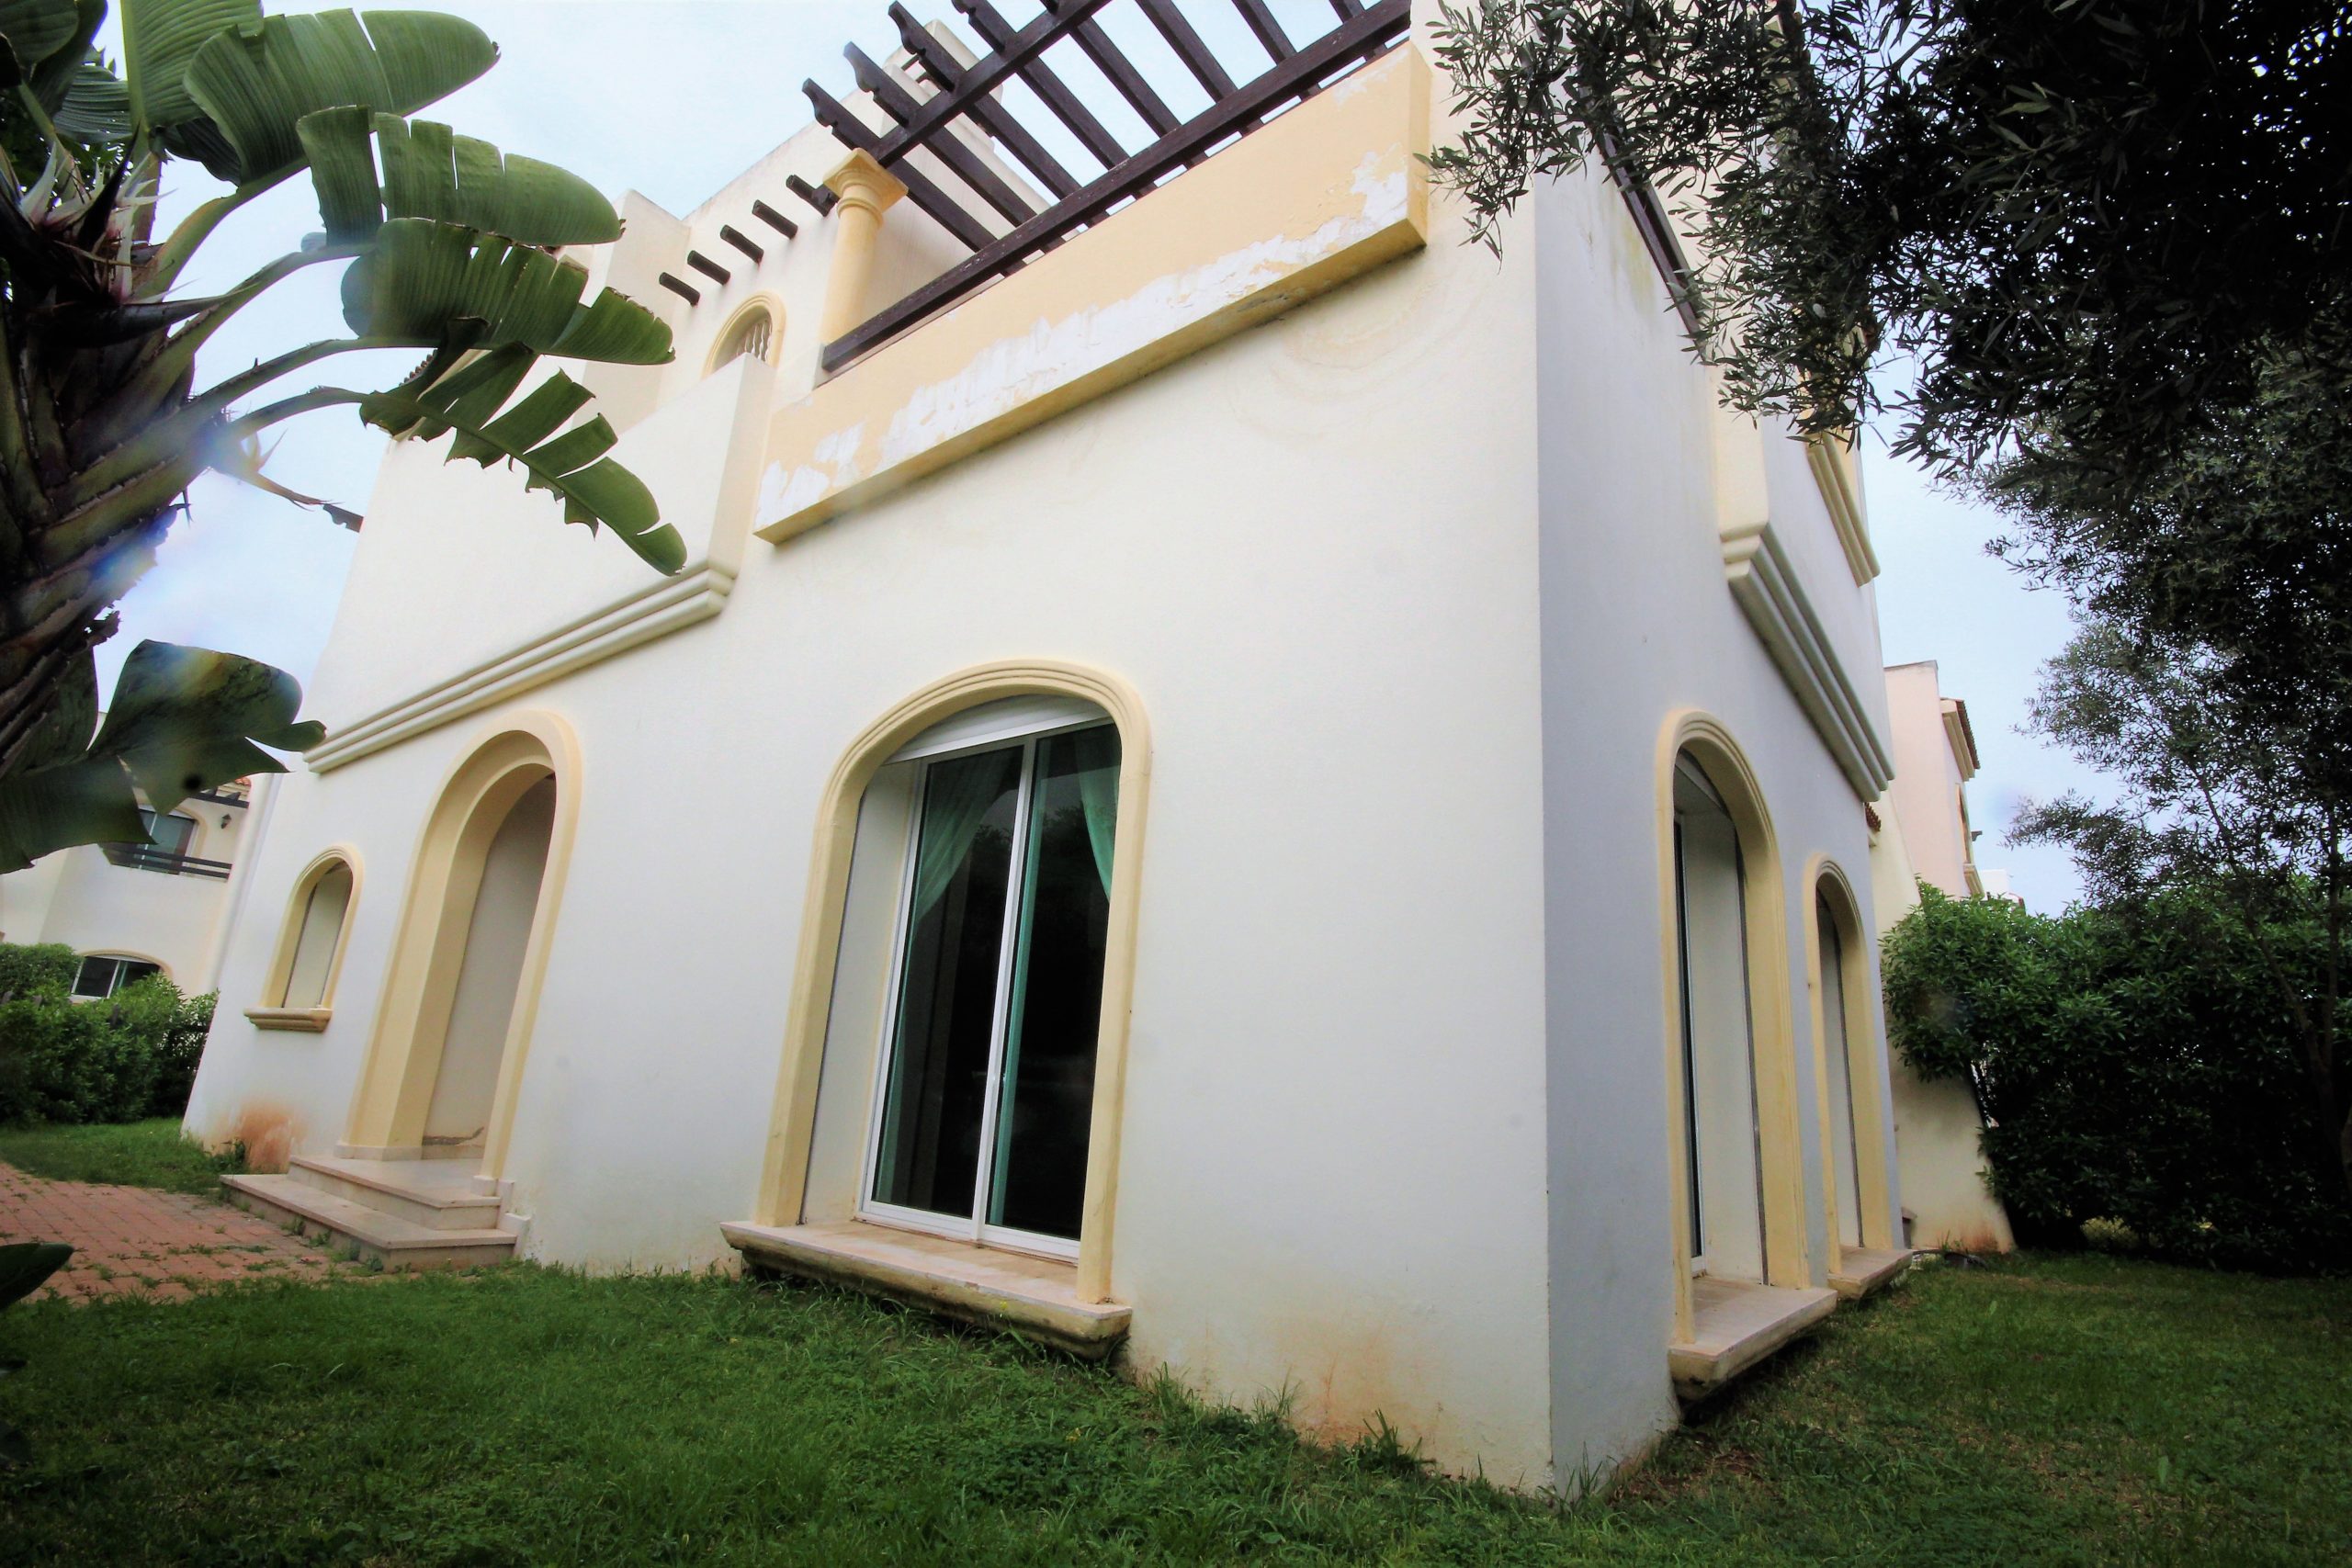 Maroc, Casablanca, Ain diab, villa à acheter 4 chambres vue mer en residence fermée